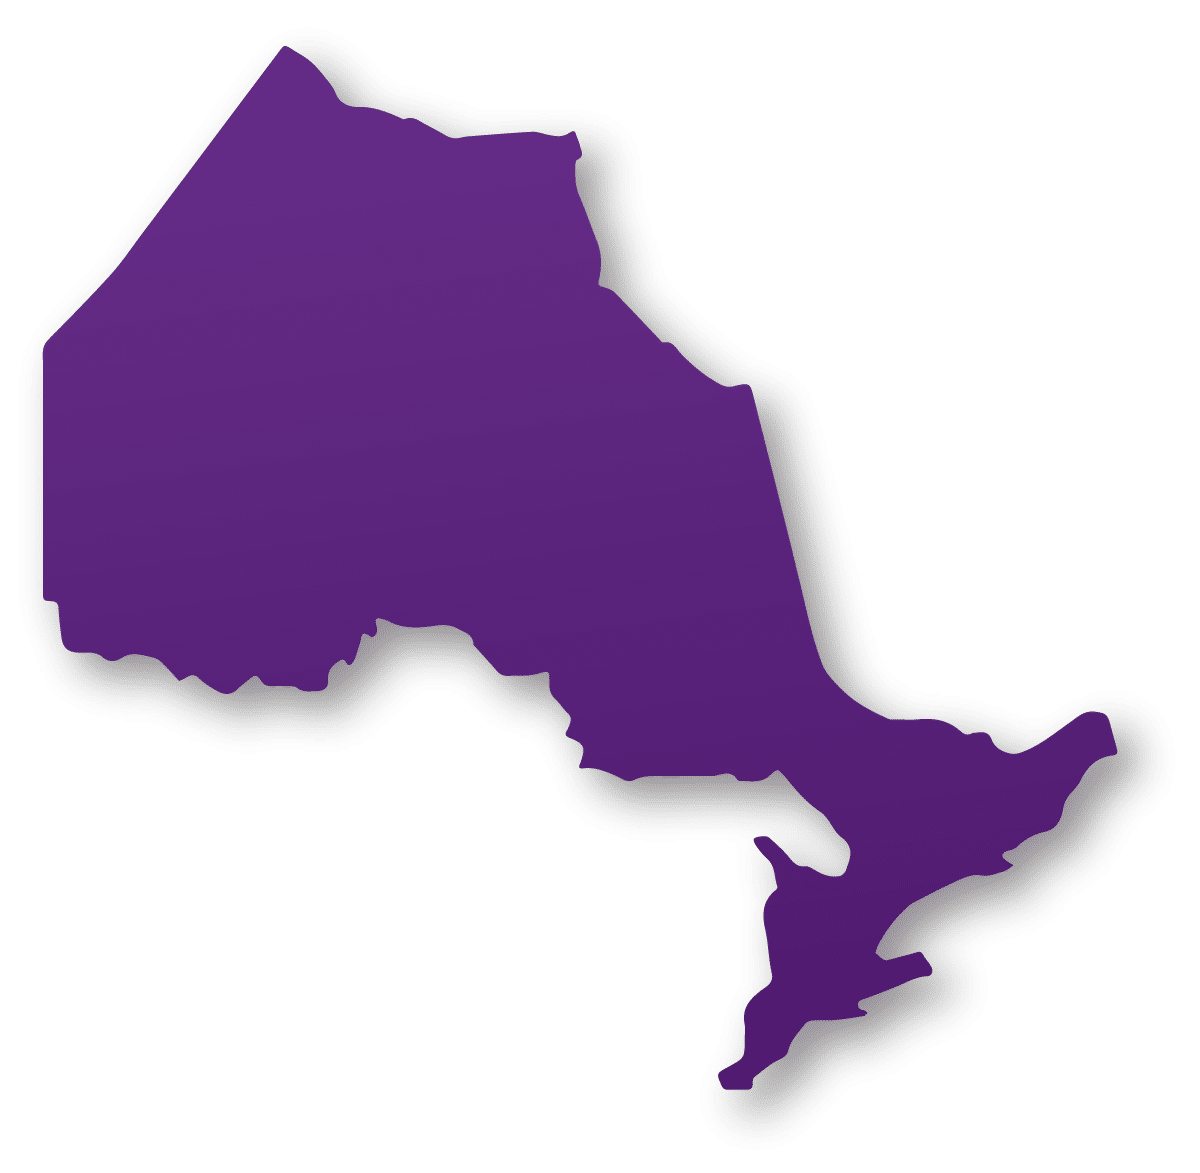 Purple map of Ontario